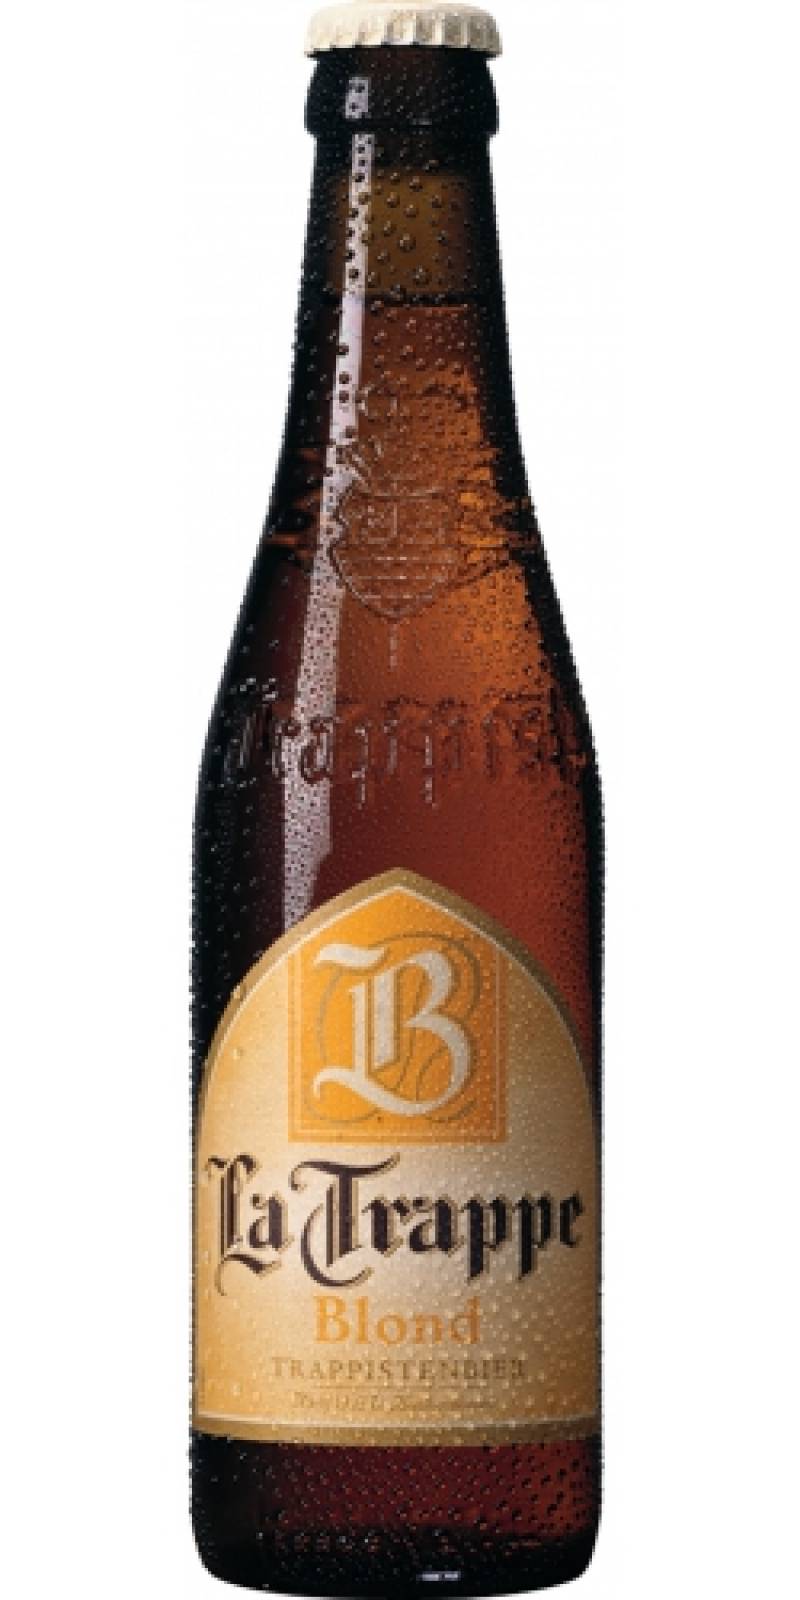 Ла трапп. Пиво la Trappe Trappist. Пиво "la Trappe" blond, 0.33 л. Бельгийский Эль la Trappe. Пиво la Trappe Trappist Dubbel.